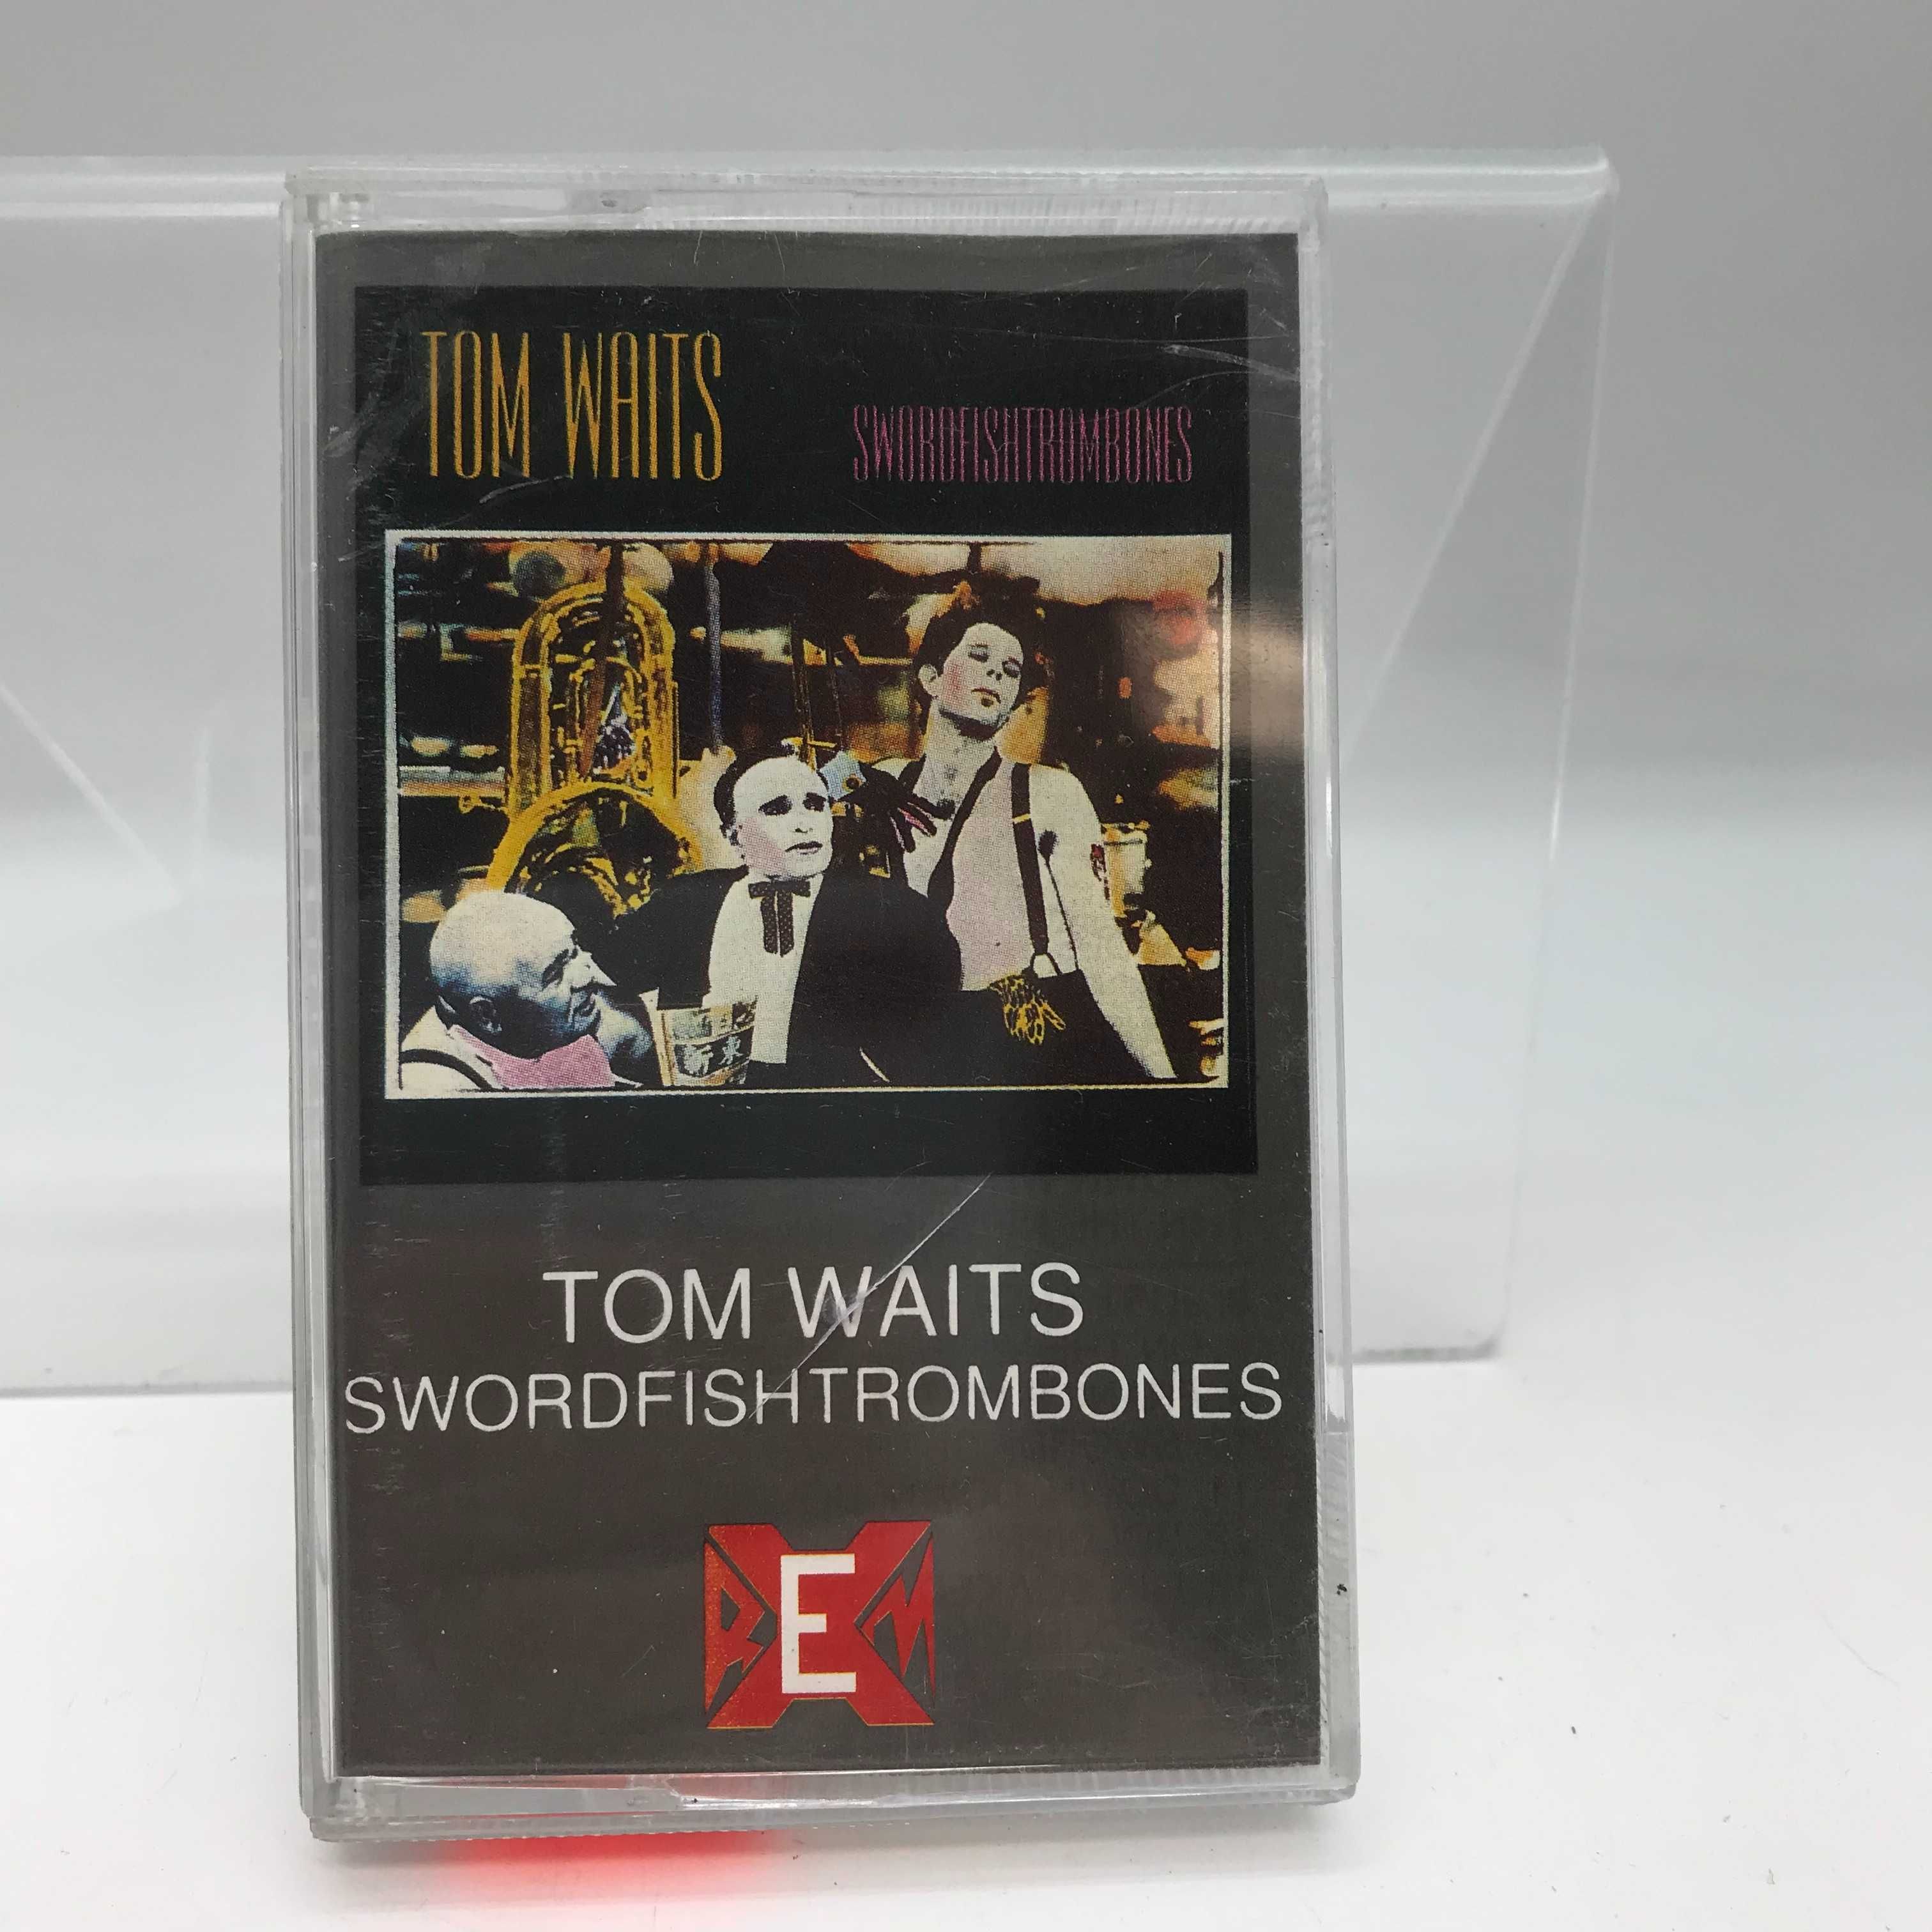 kaseta tom waits - swordfish trombones (3174)